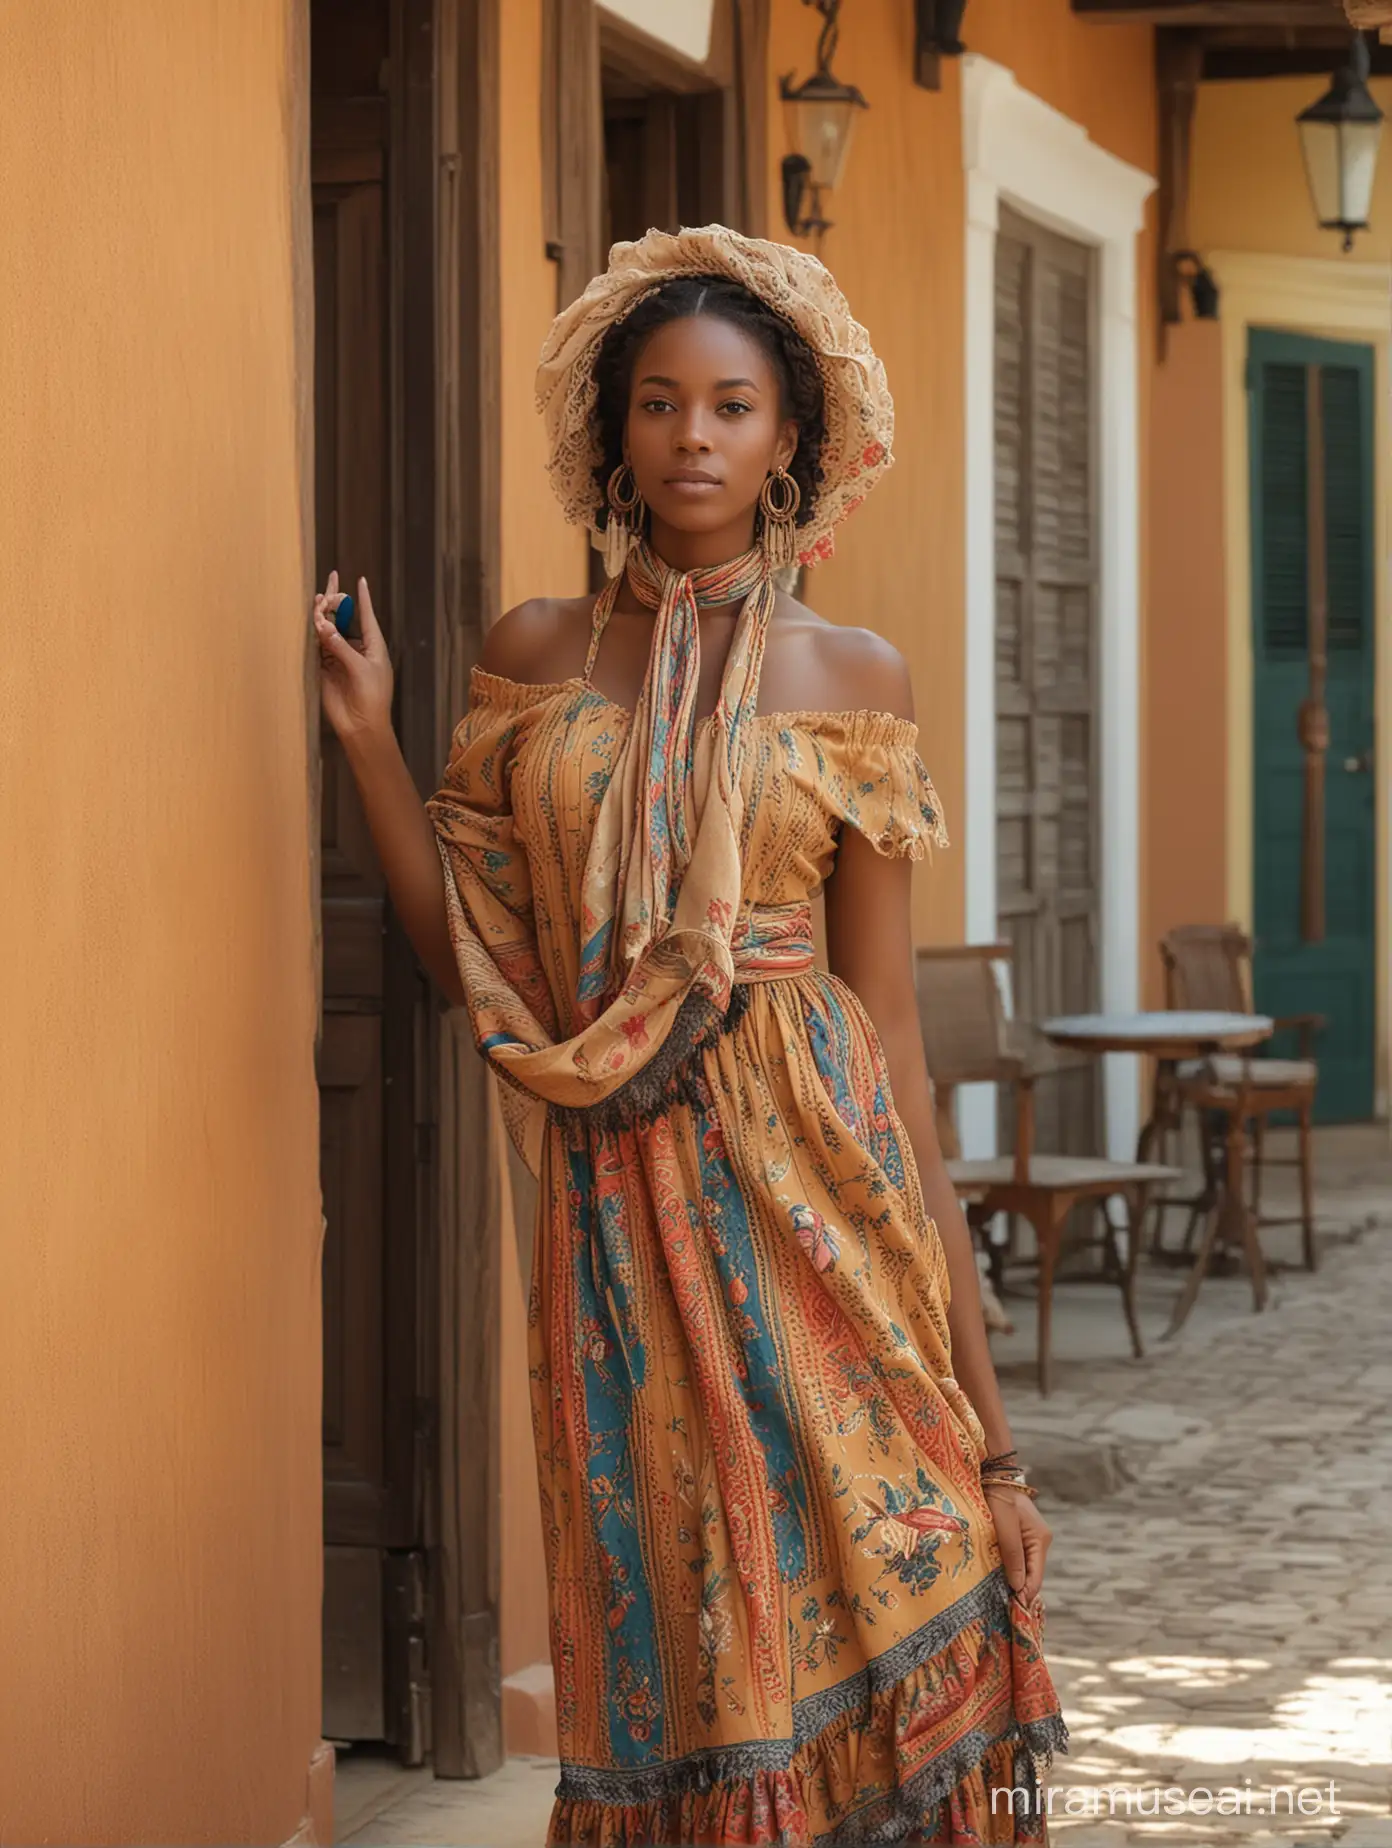 Elegant Caribbean Woman in 1800s Attire Walking by a Caribbean House